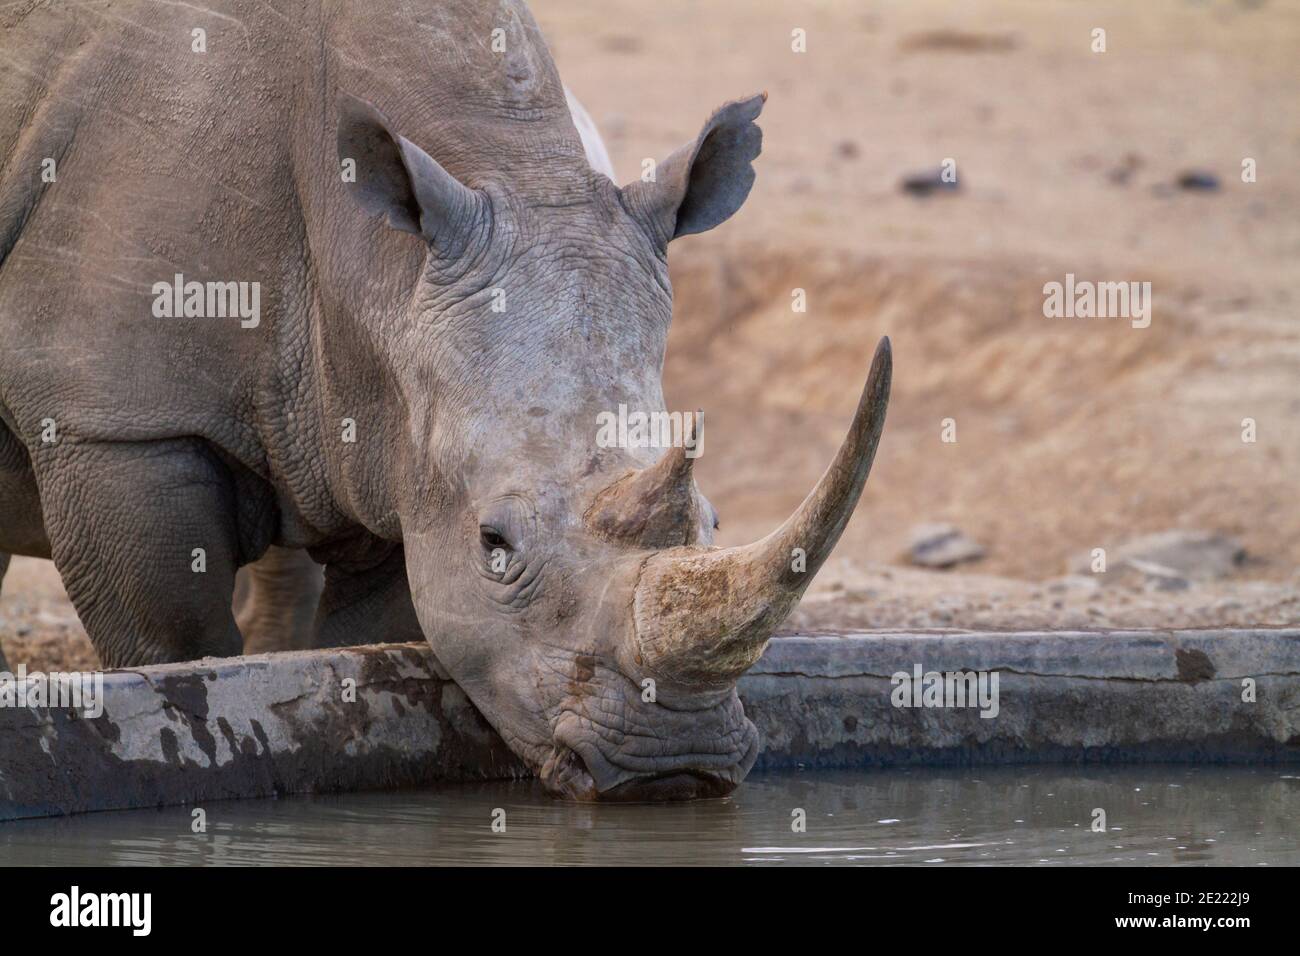 Southern white rhinoceros (Ceratotherium simum) drinks at water trough in Ol Pejeta Conservancy, Kenya, Africa. Wildlife seen on safari holiday Stock Photo